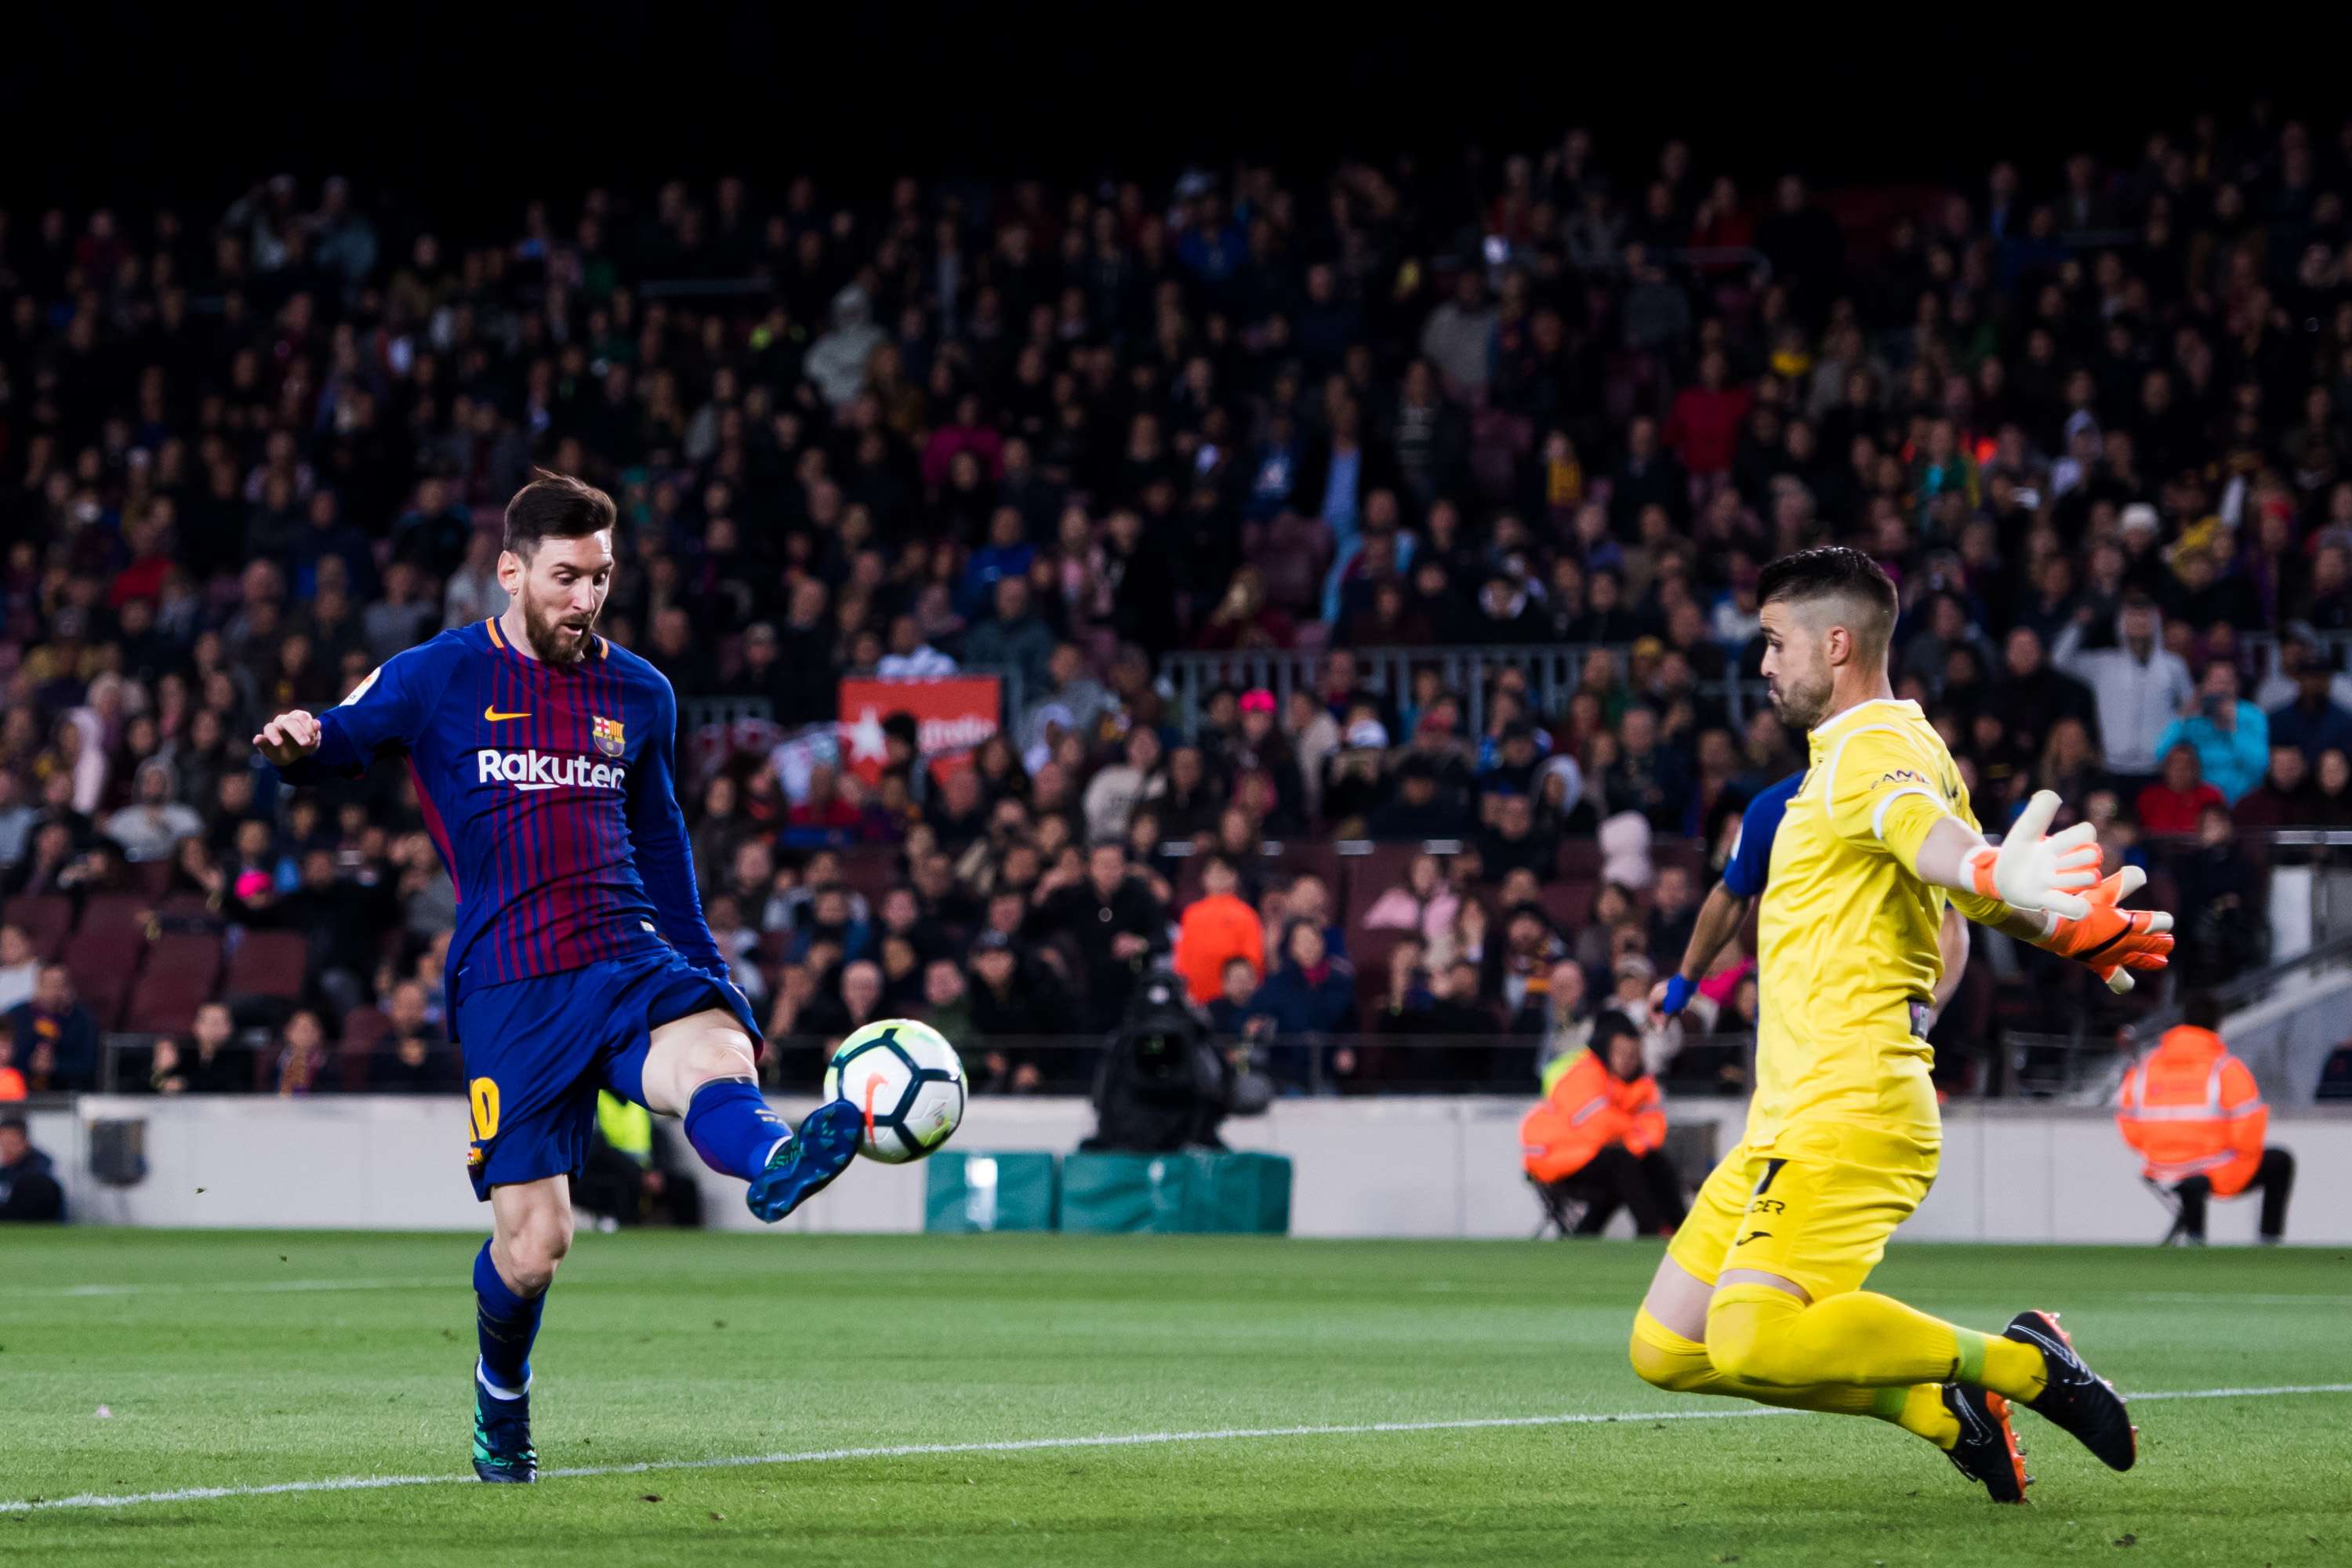 Ivan Cuellar VS Lionel Messi